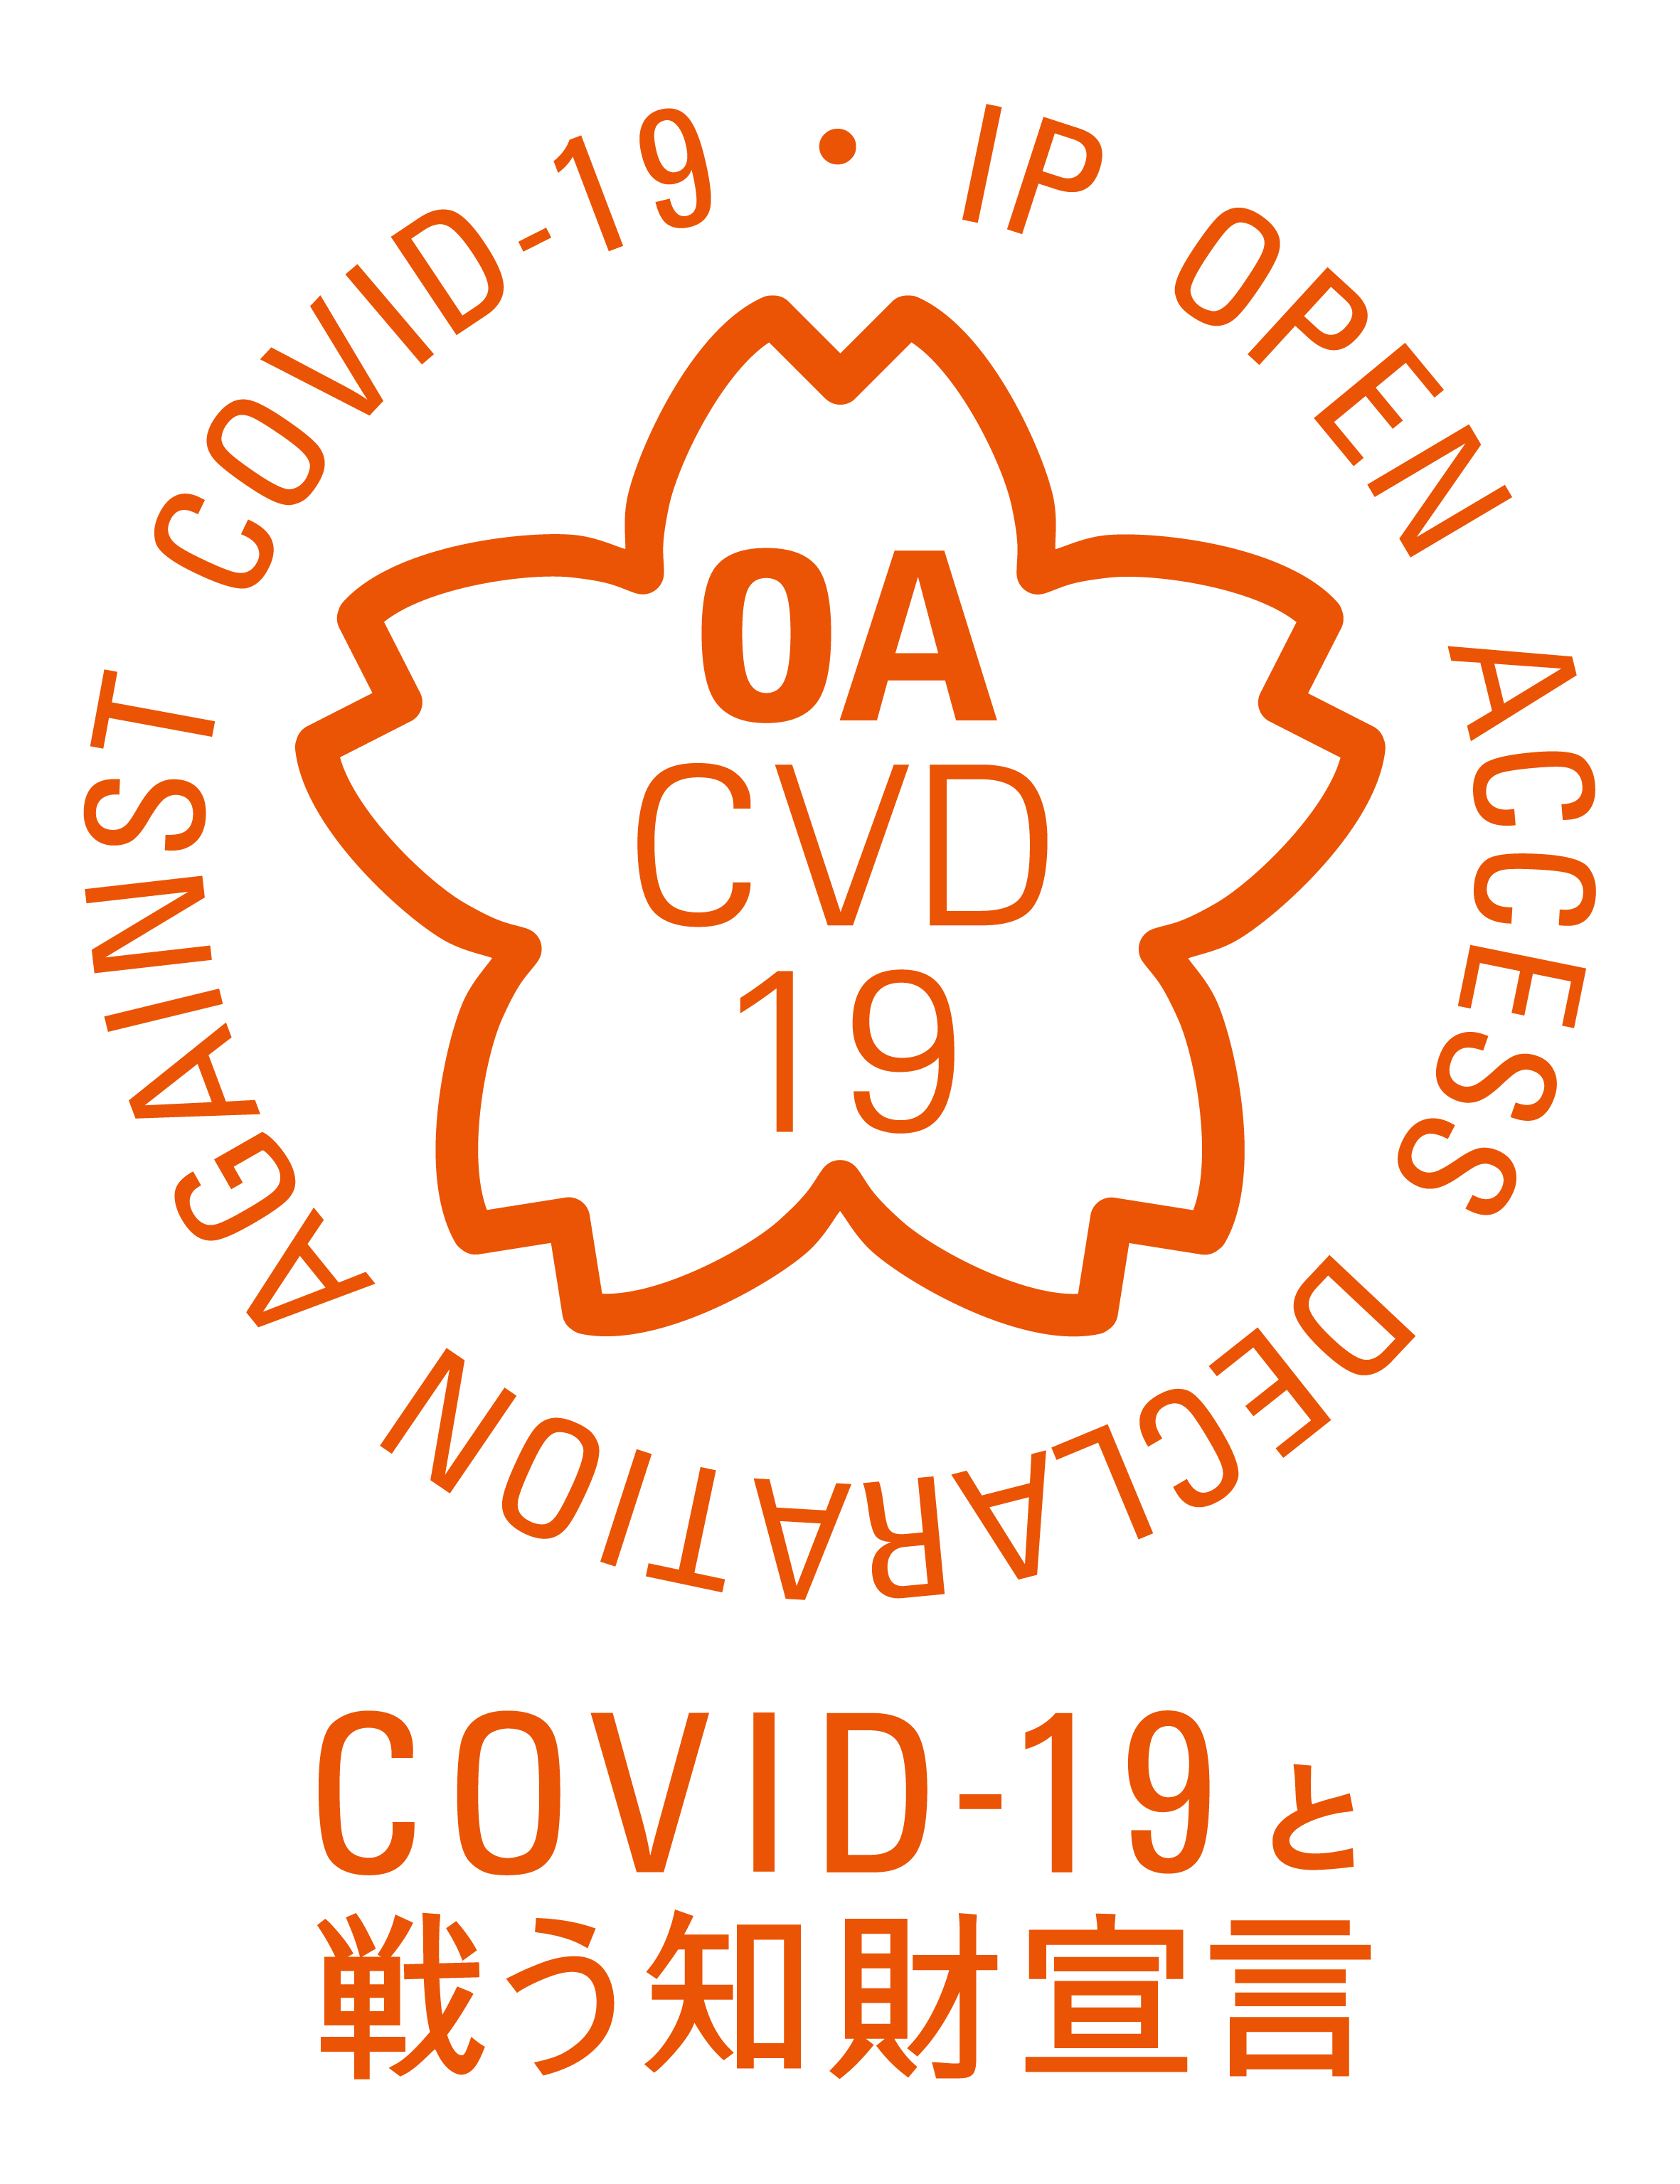 COVID-19と戦う知財宣言